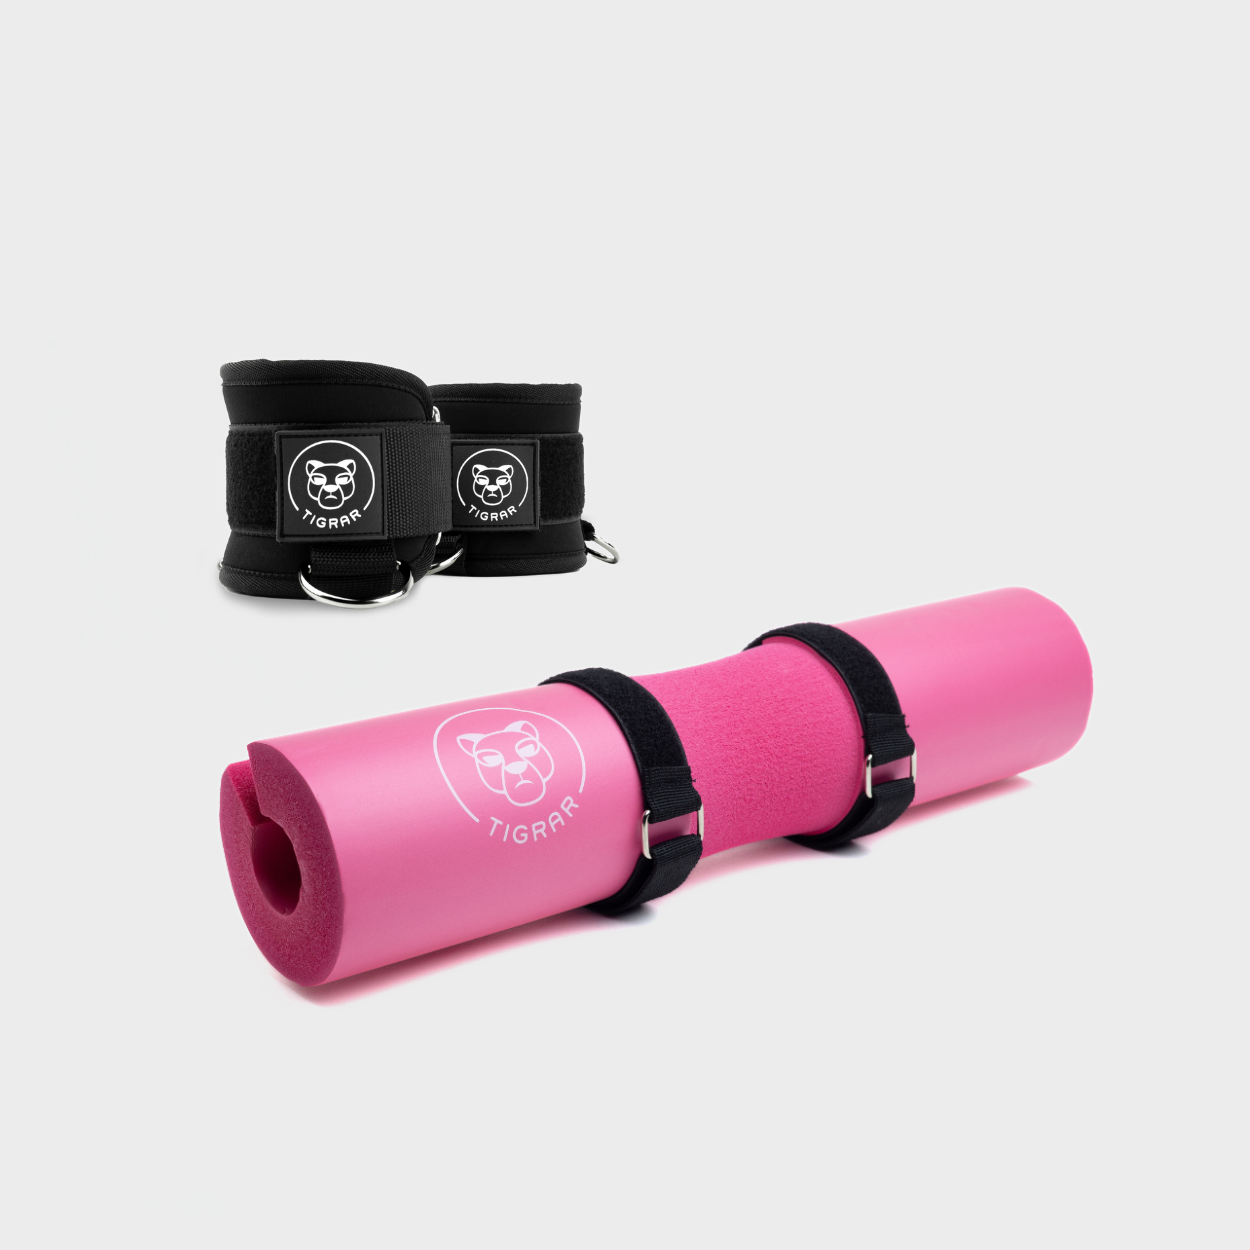 Tigrar Strength and comfort kit met pink barbell pad en zwarte enkel straps